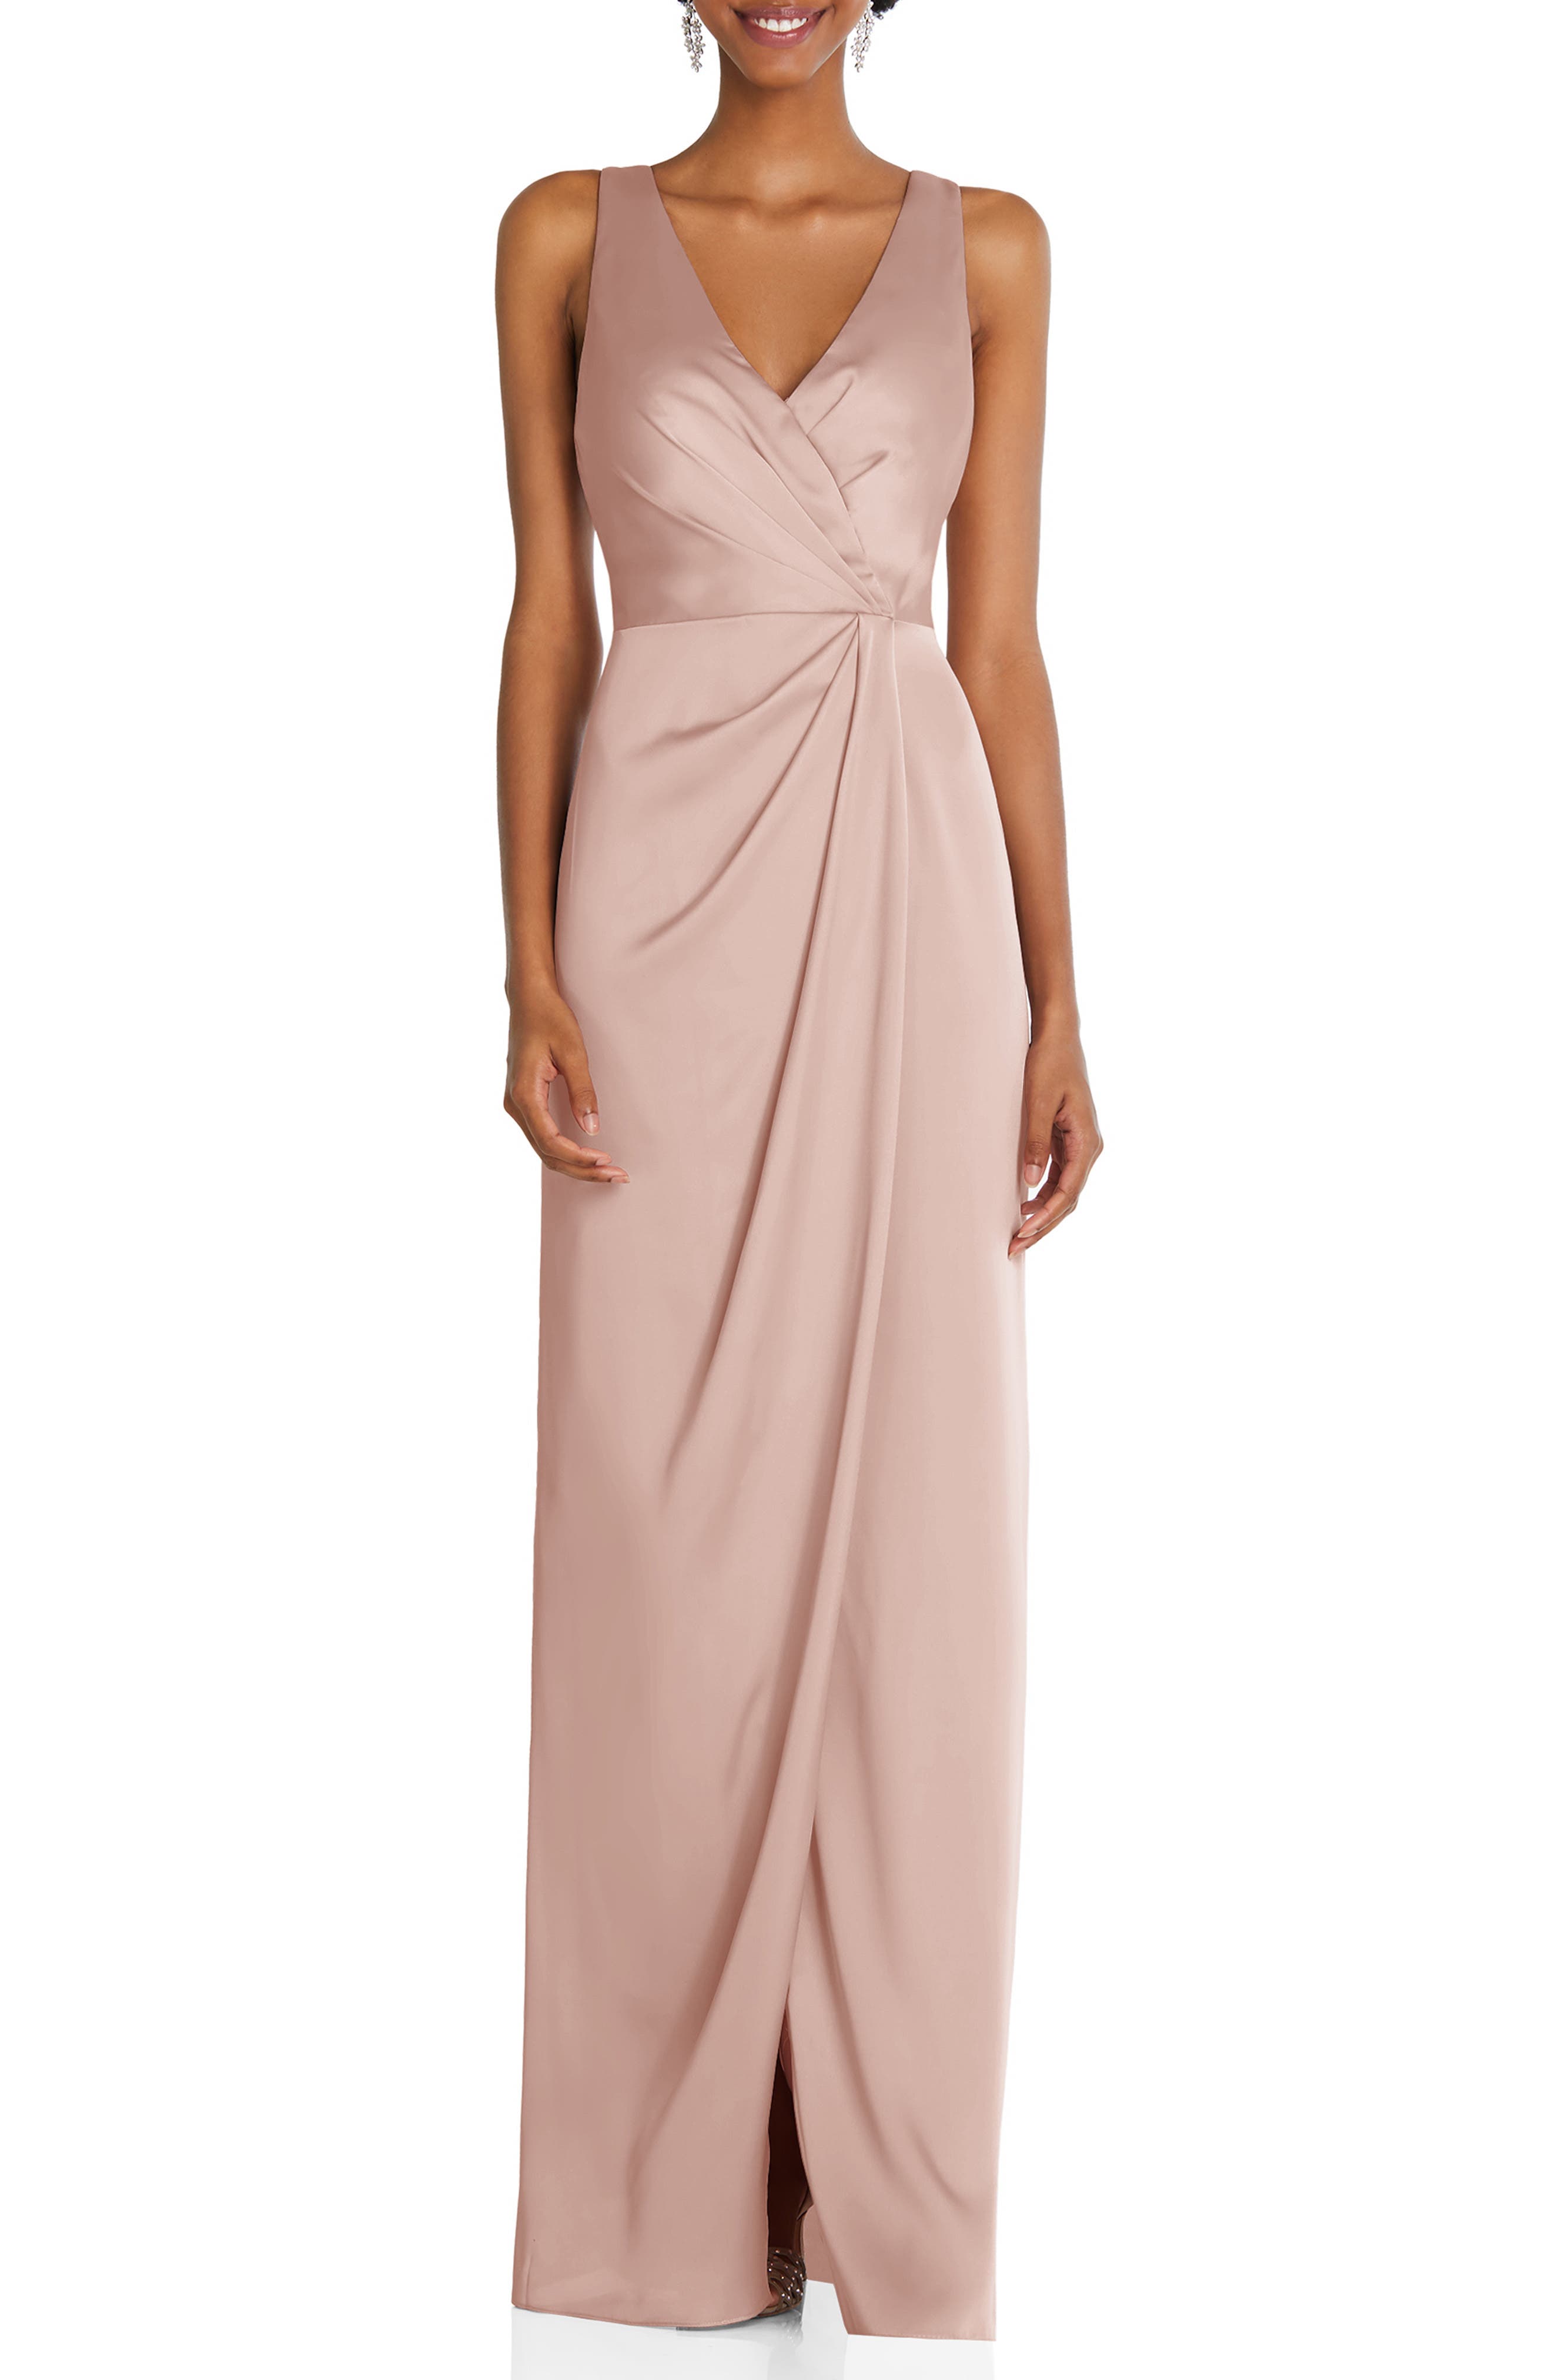 Wrap Formal Dresses \u0026 Evening Gowns ...